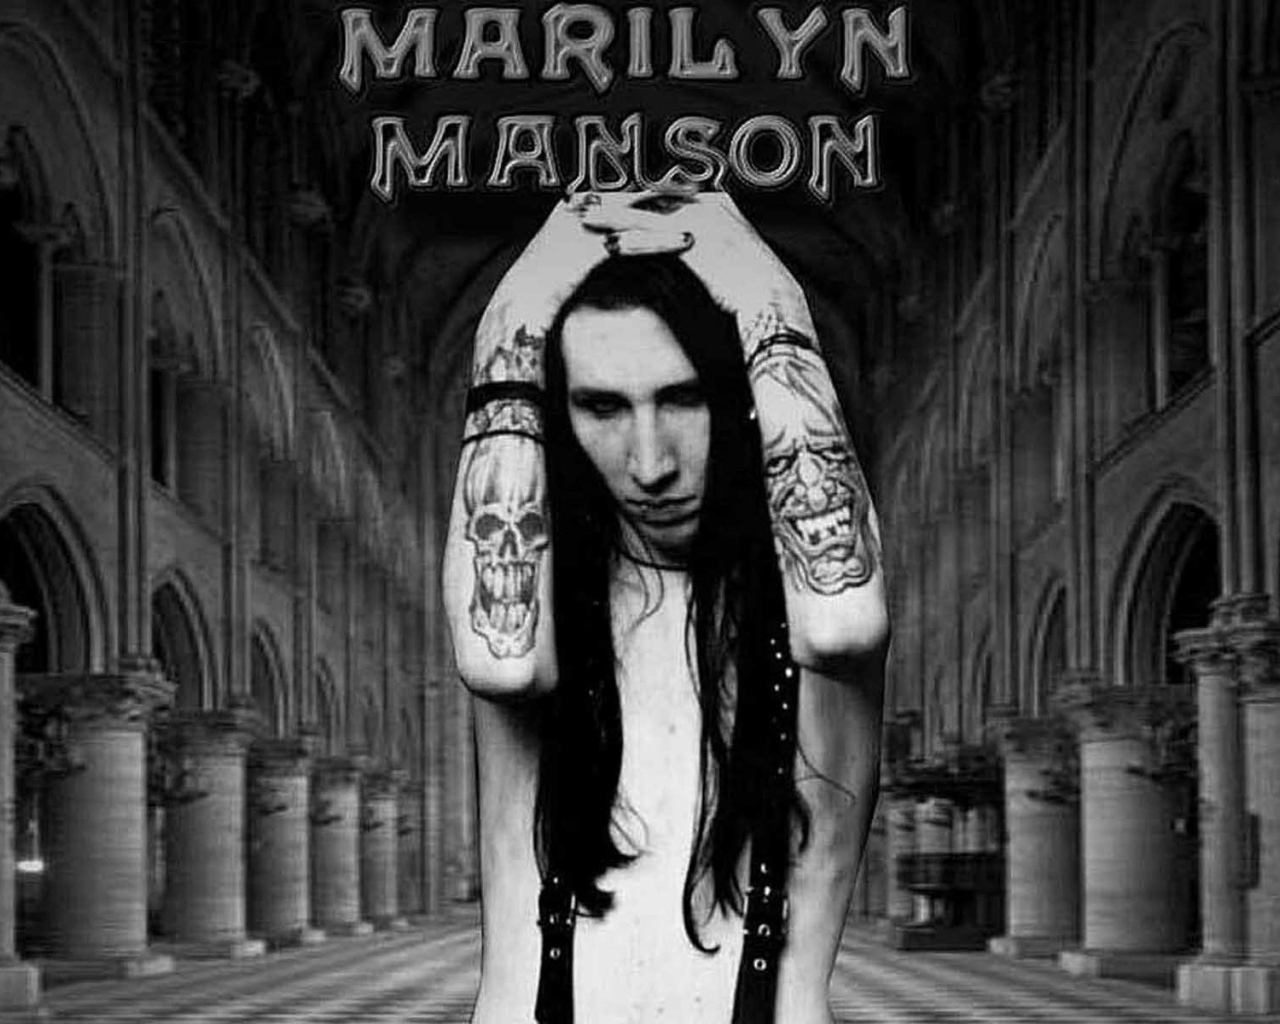 Poster artist Marilyn Manson